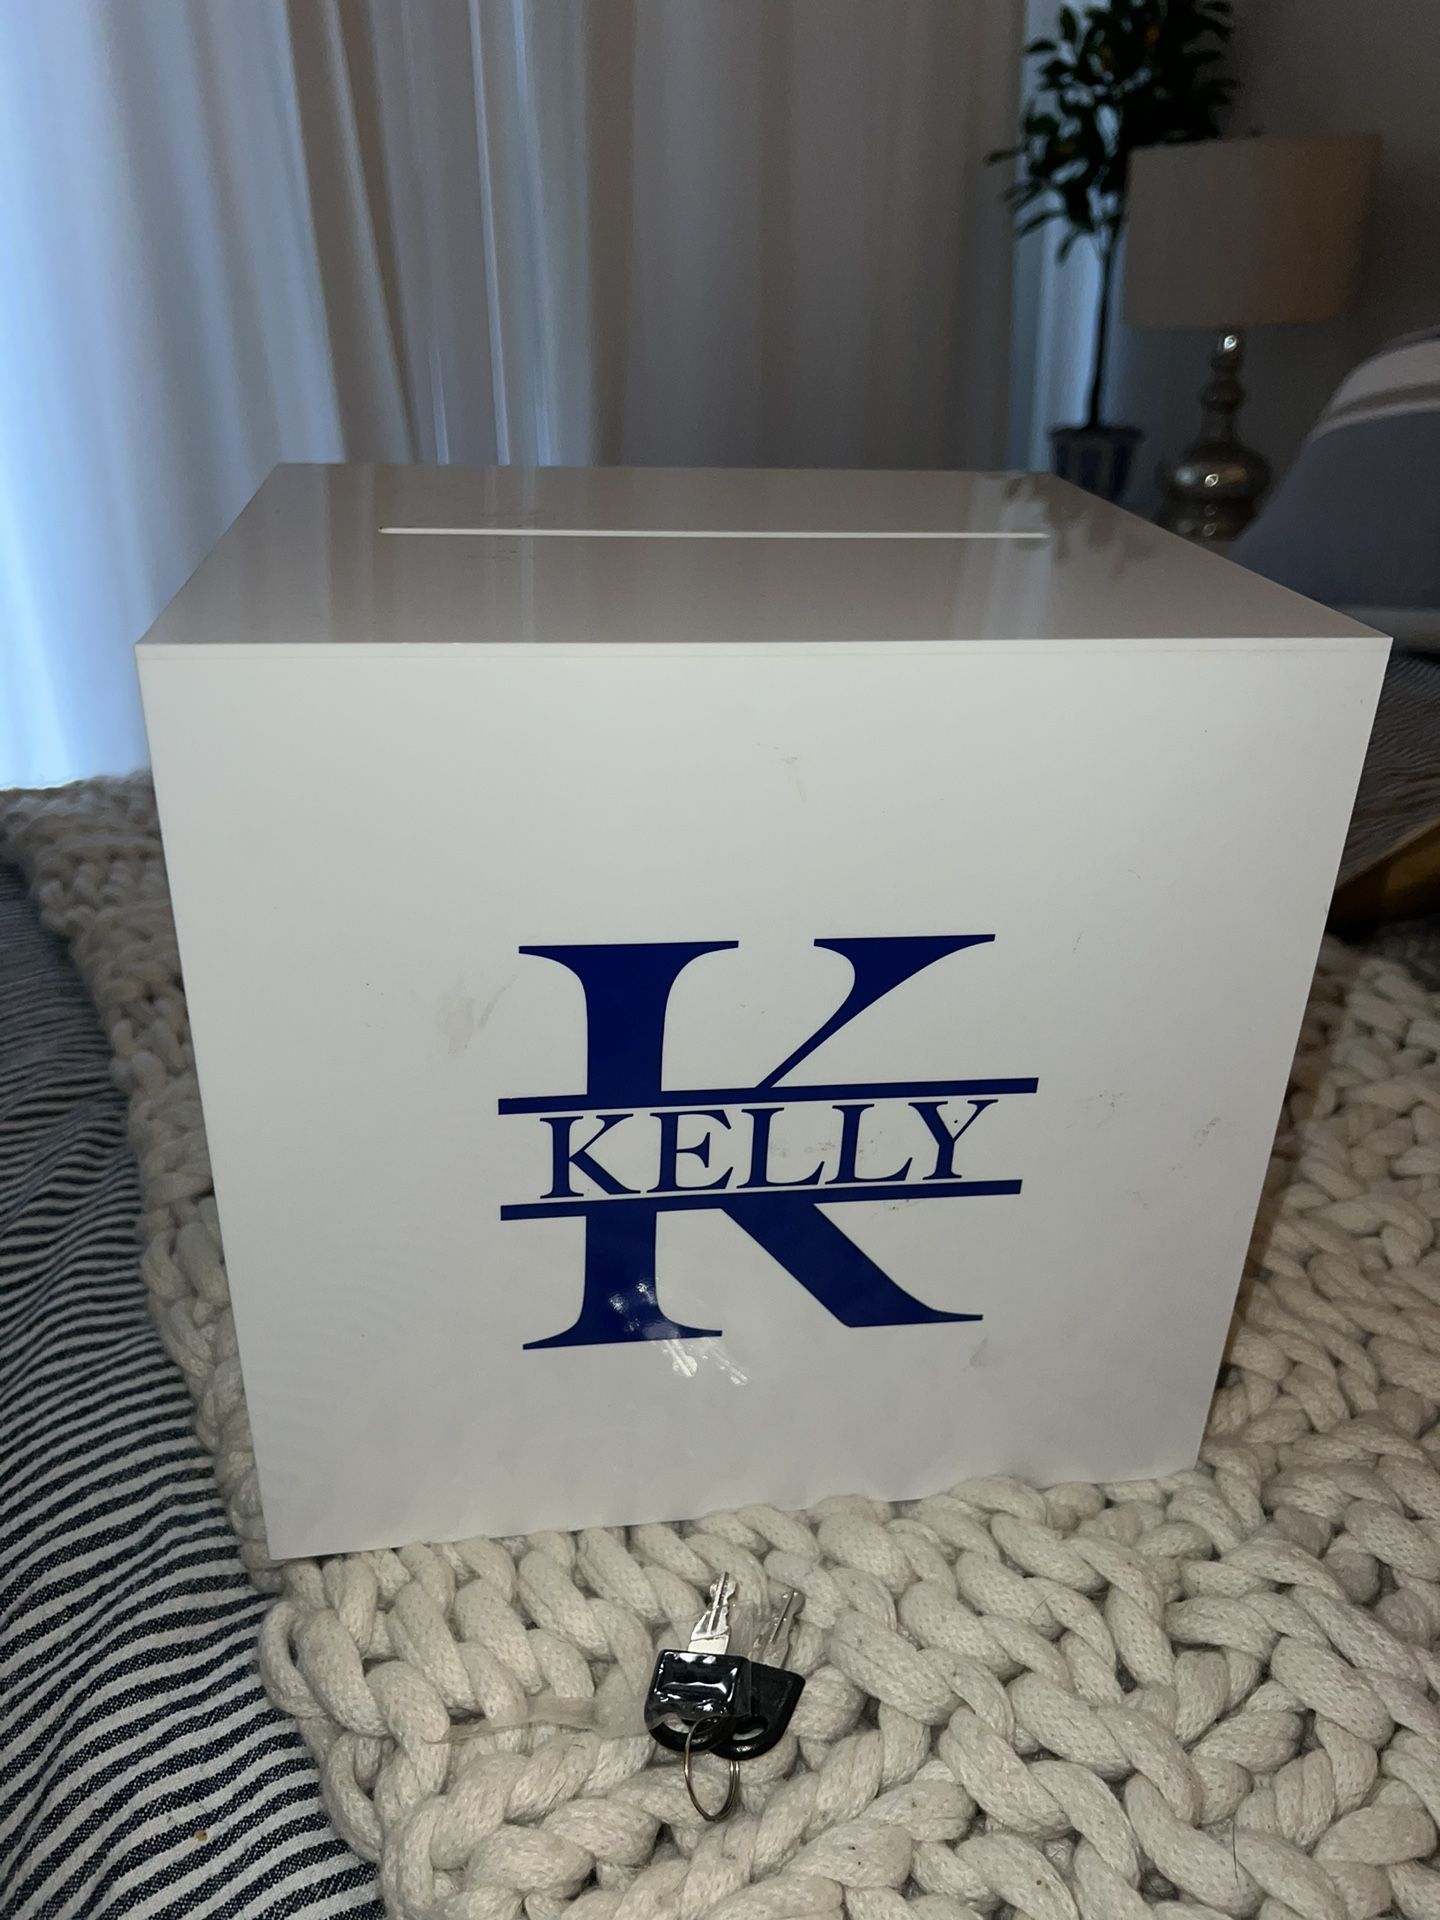 White Acrylic Wedding Card Box With Key